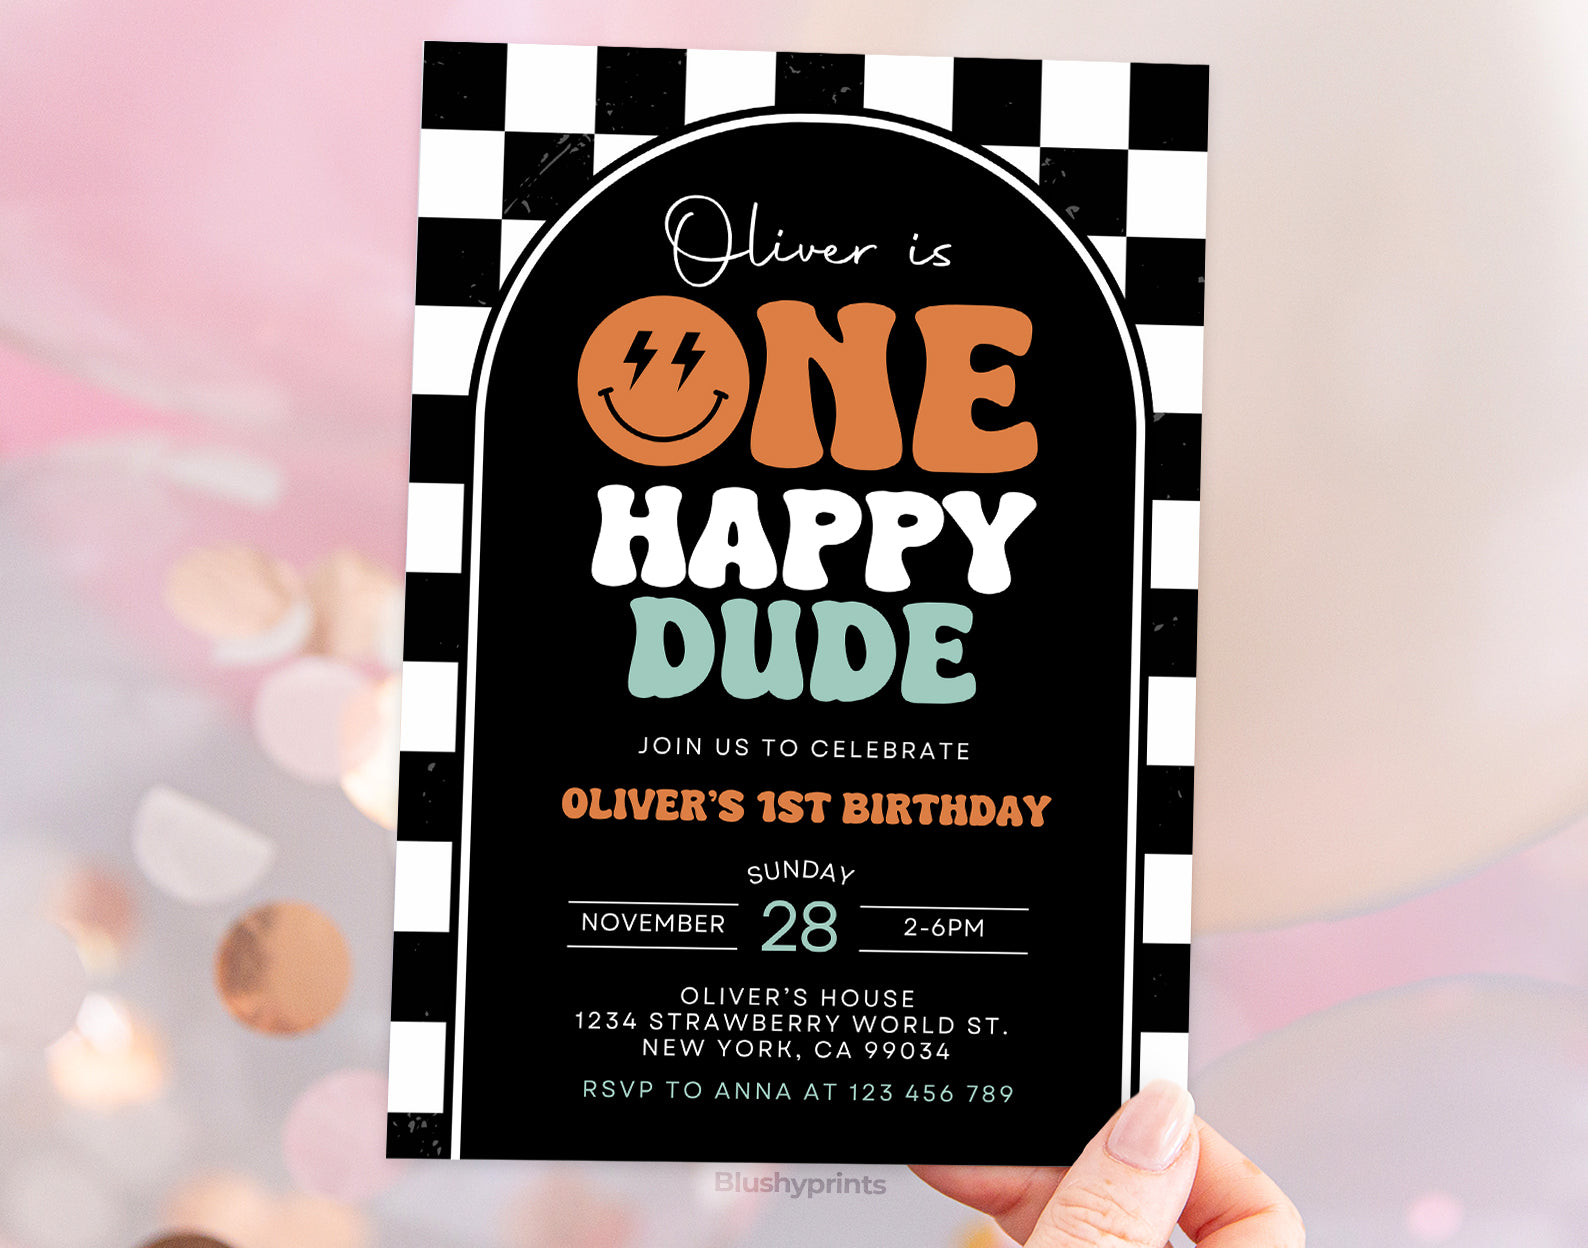 One Happy Dude Birthday Invitation Etemply